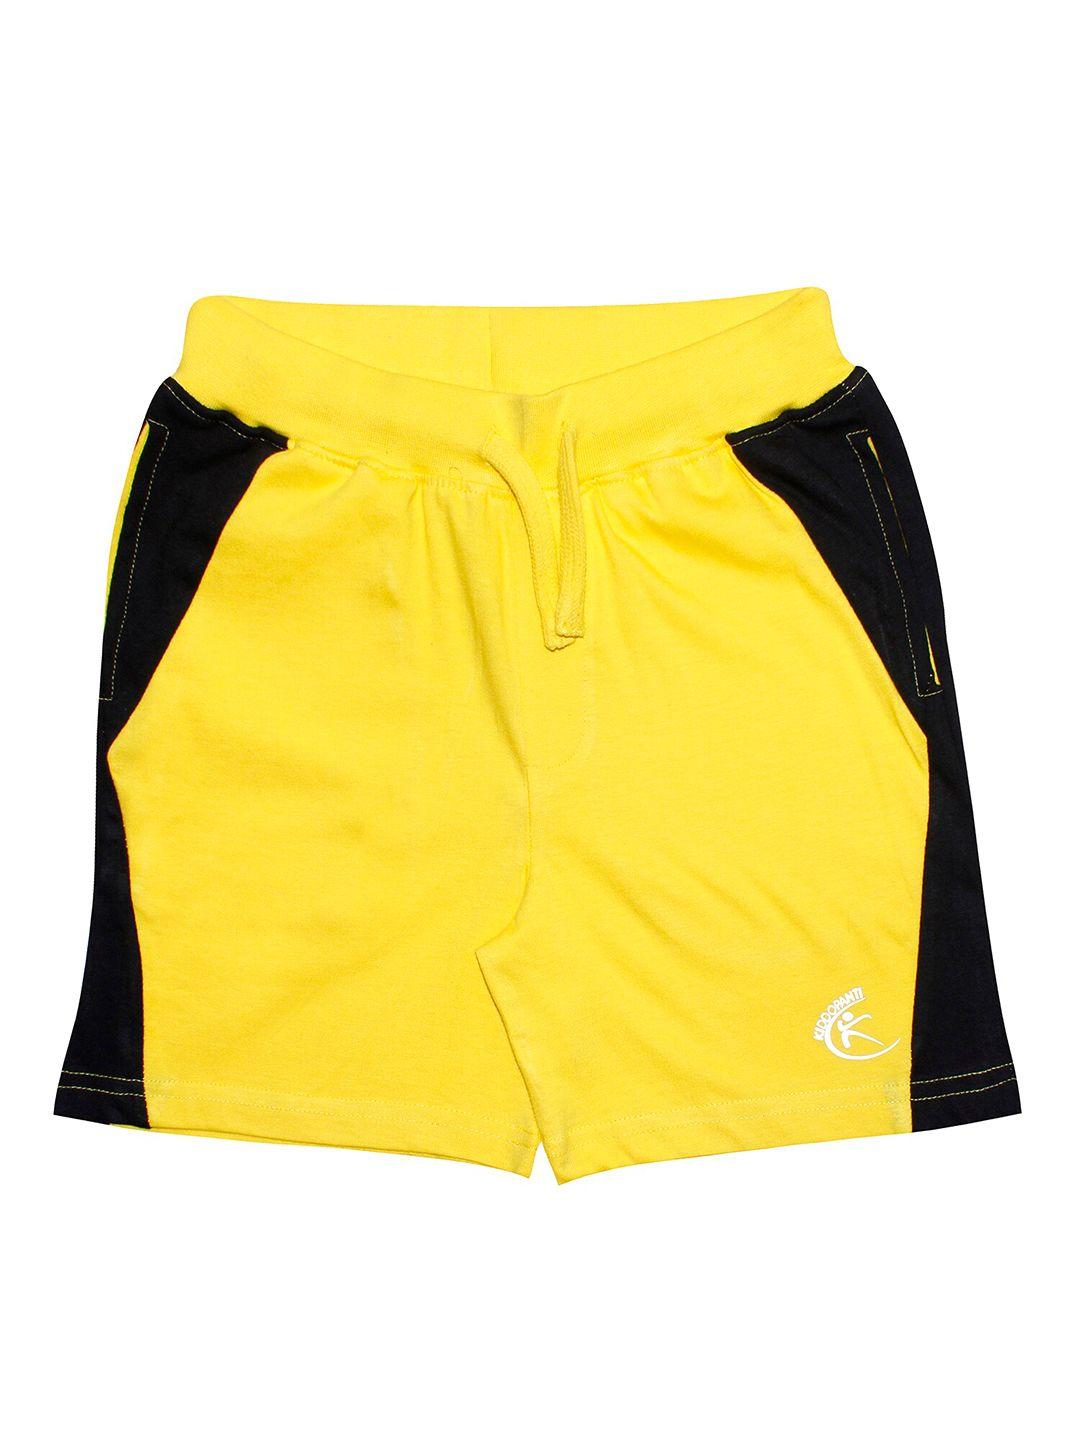 kiddopanti-boys-yellow-colorblocked-shorts